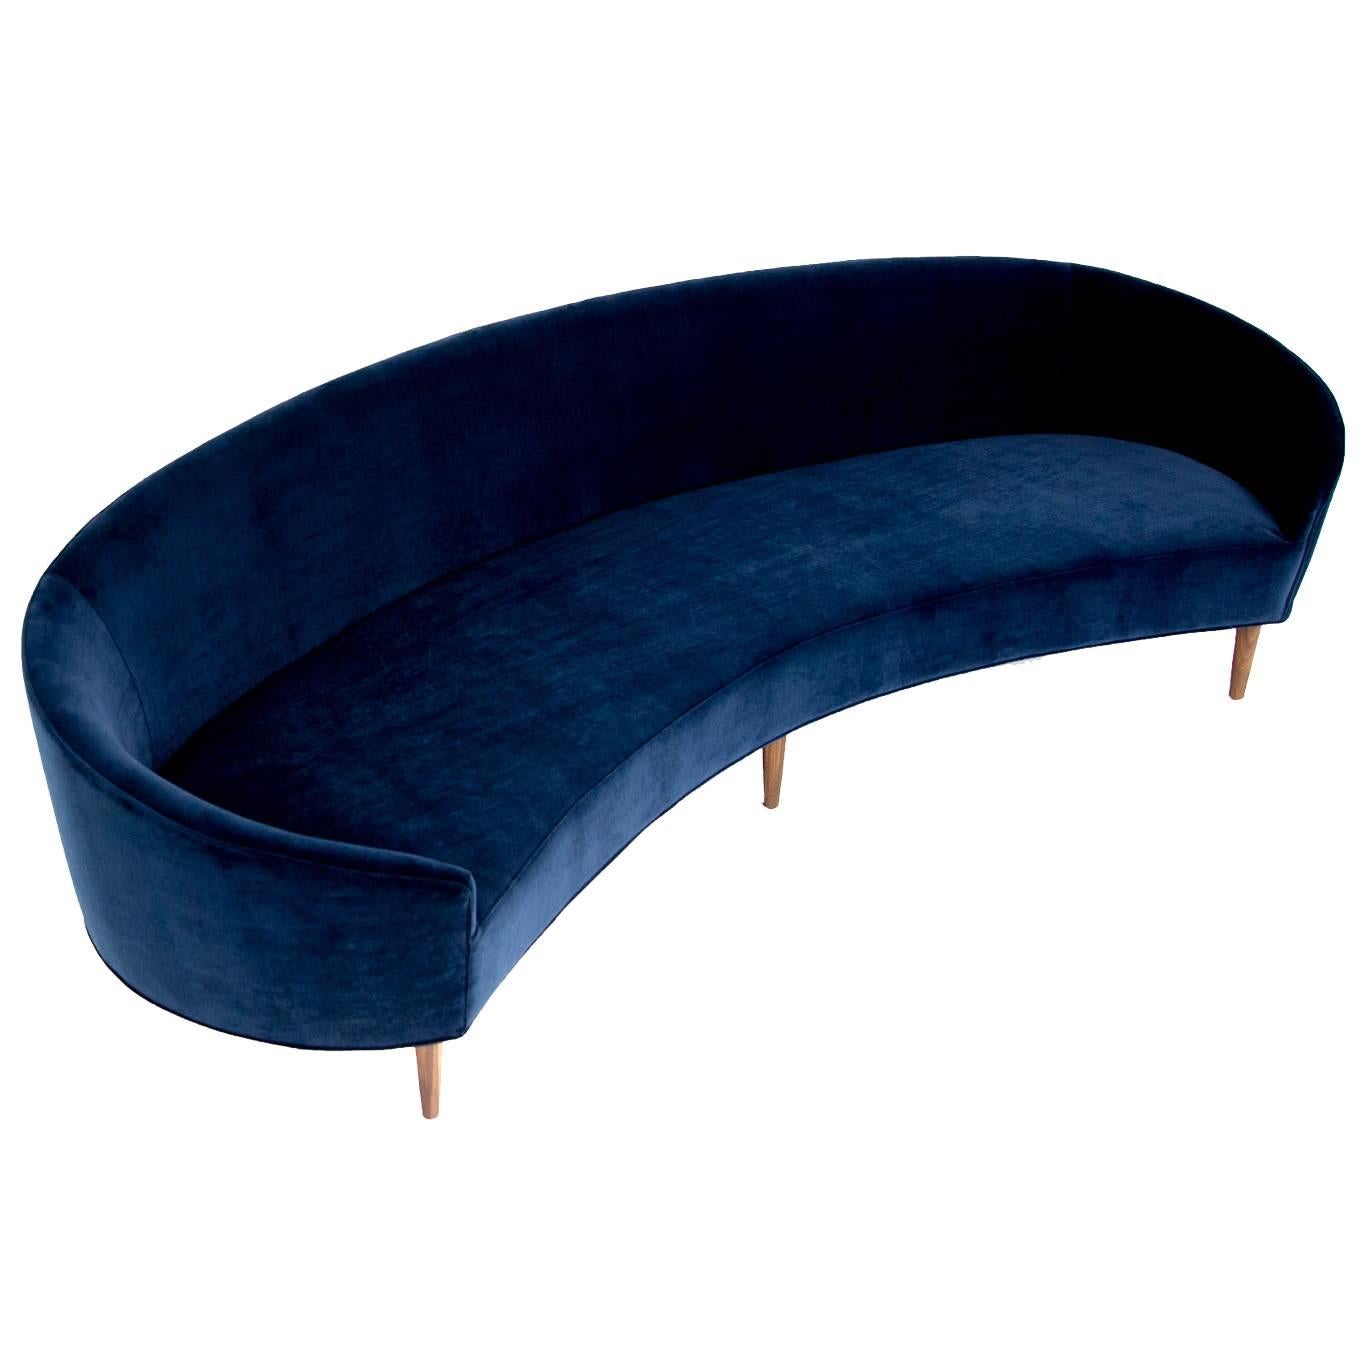 Art Deco Style Crescent Sofa With Walnut Legs In Navy Blue Velvet ...